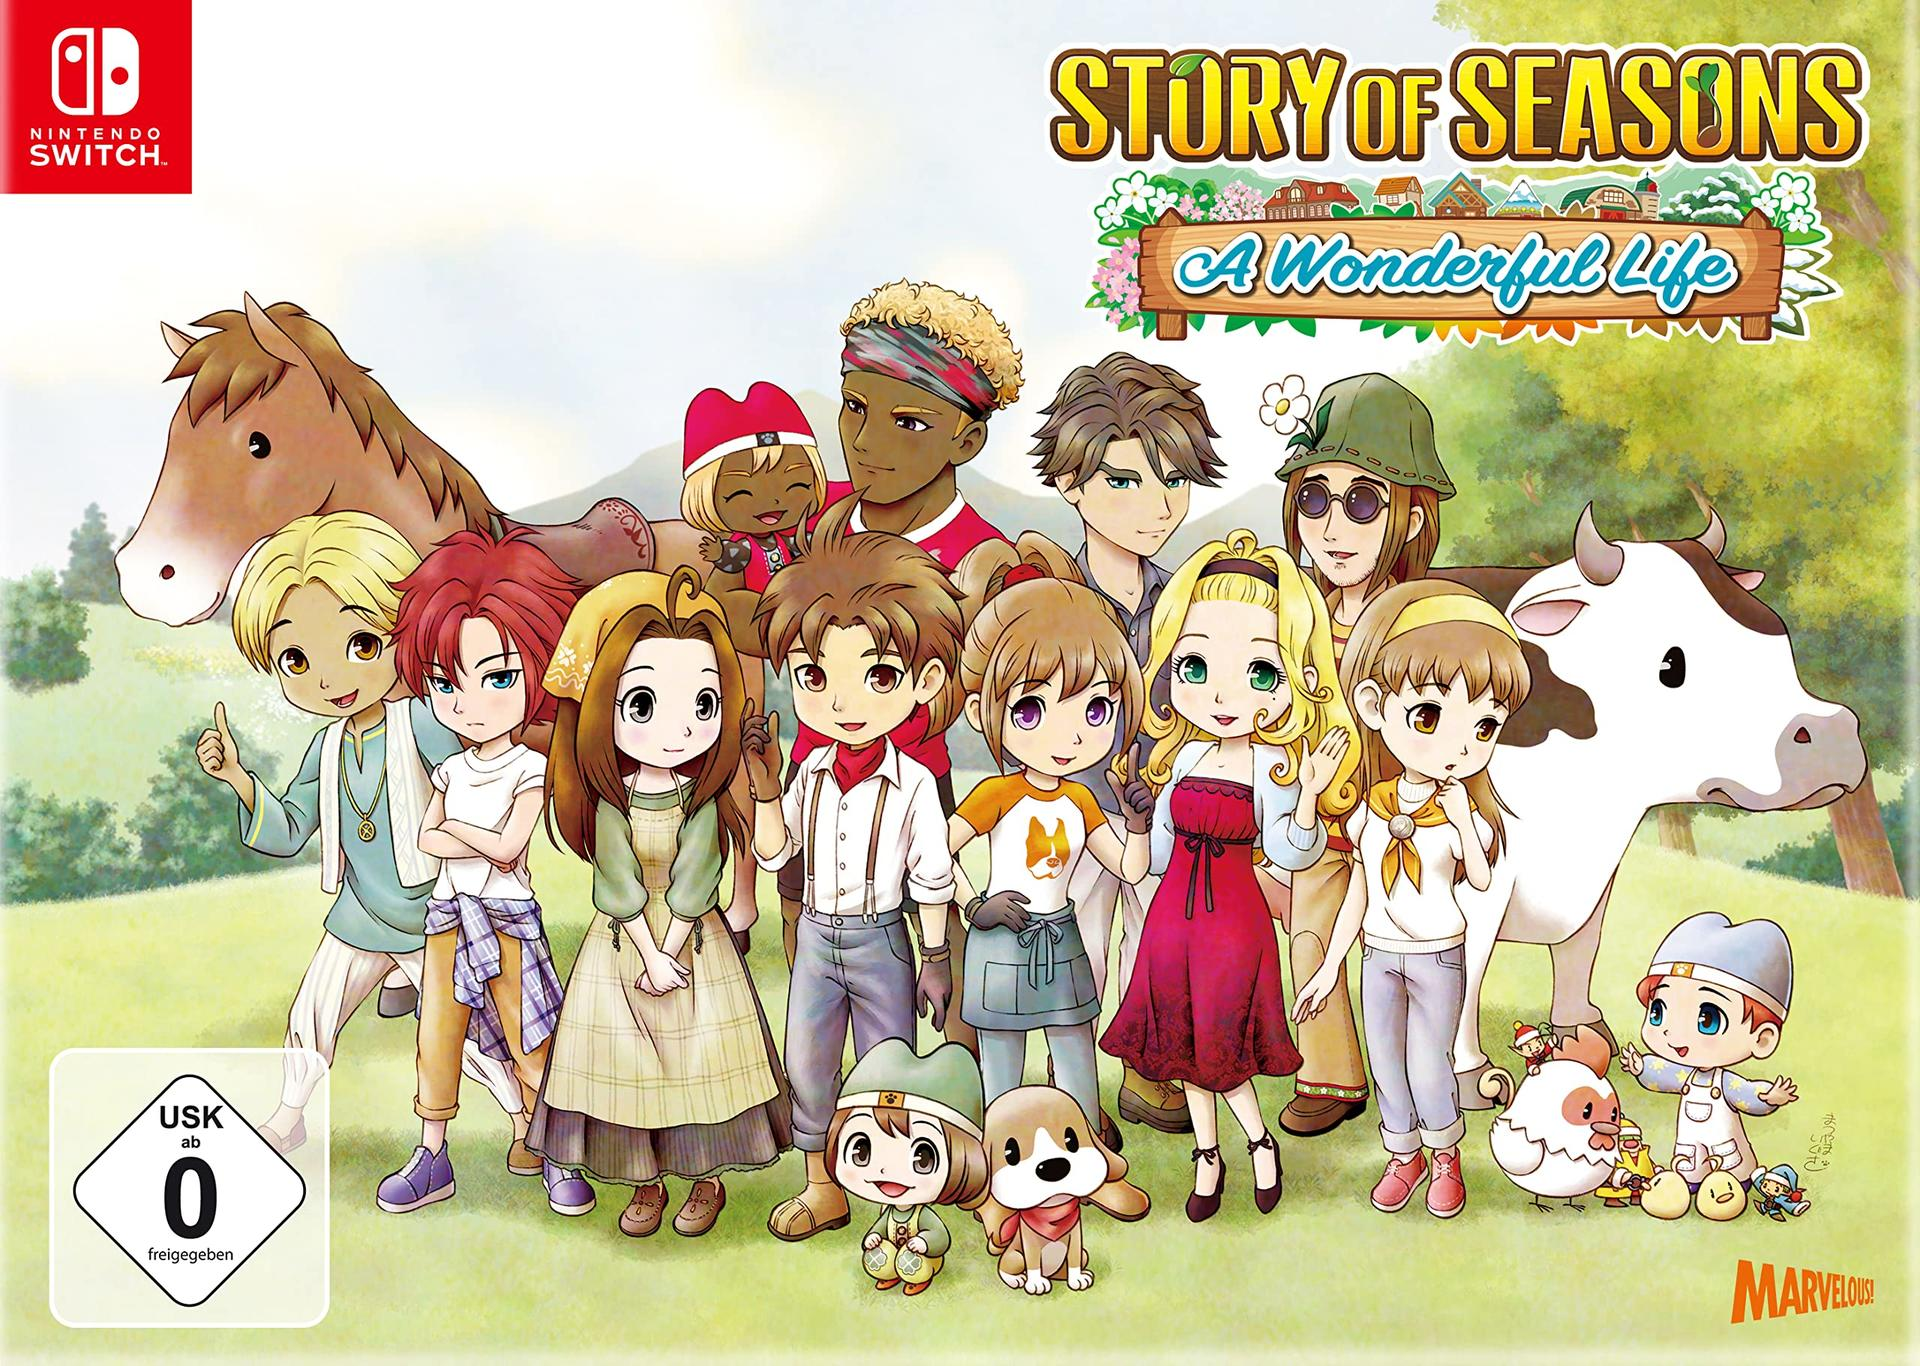 - Edition Seasons: of - Story Switch] Life A Wonderful Limited [Nintendo